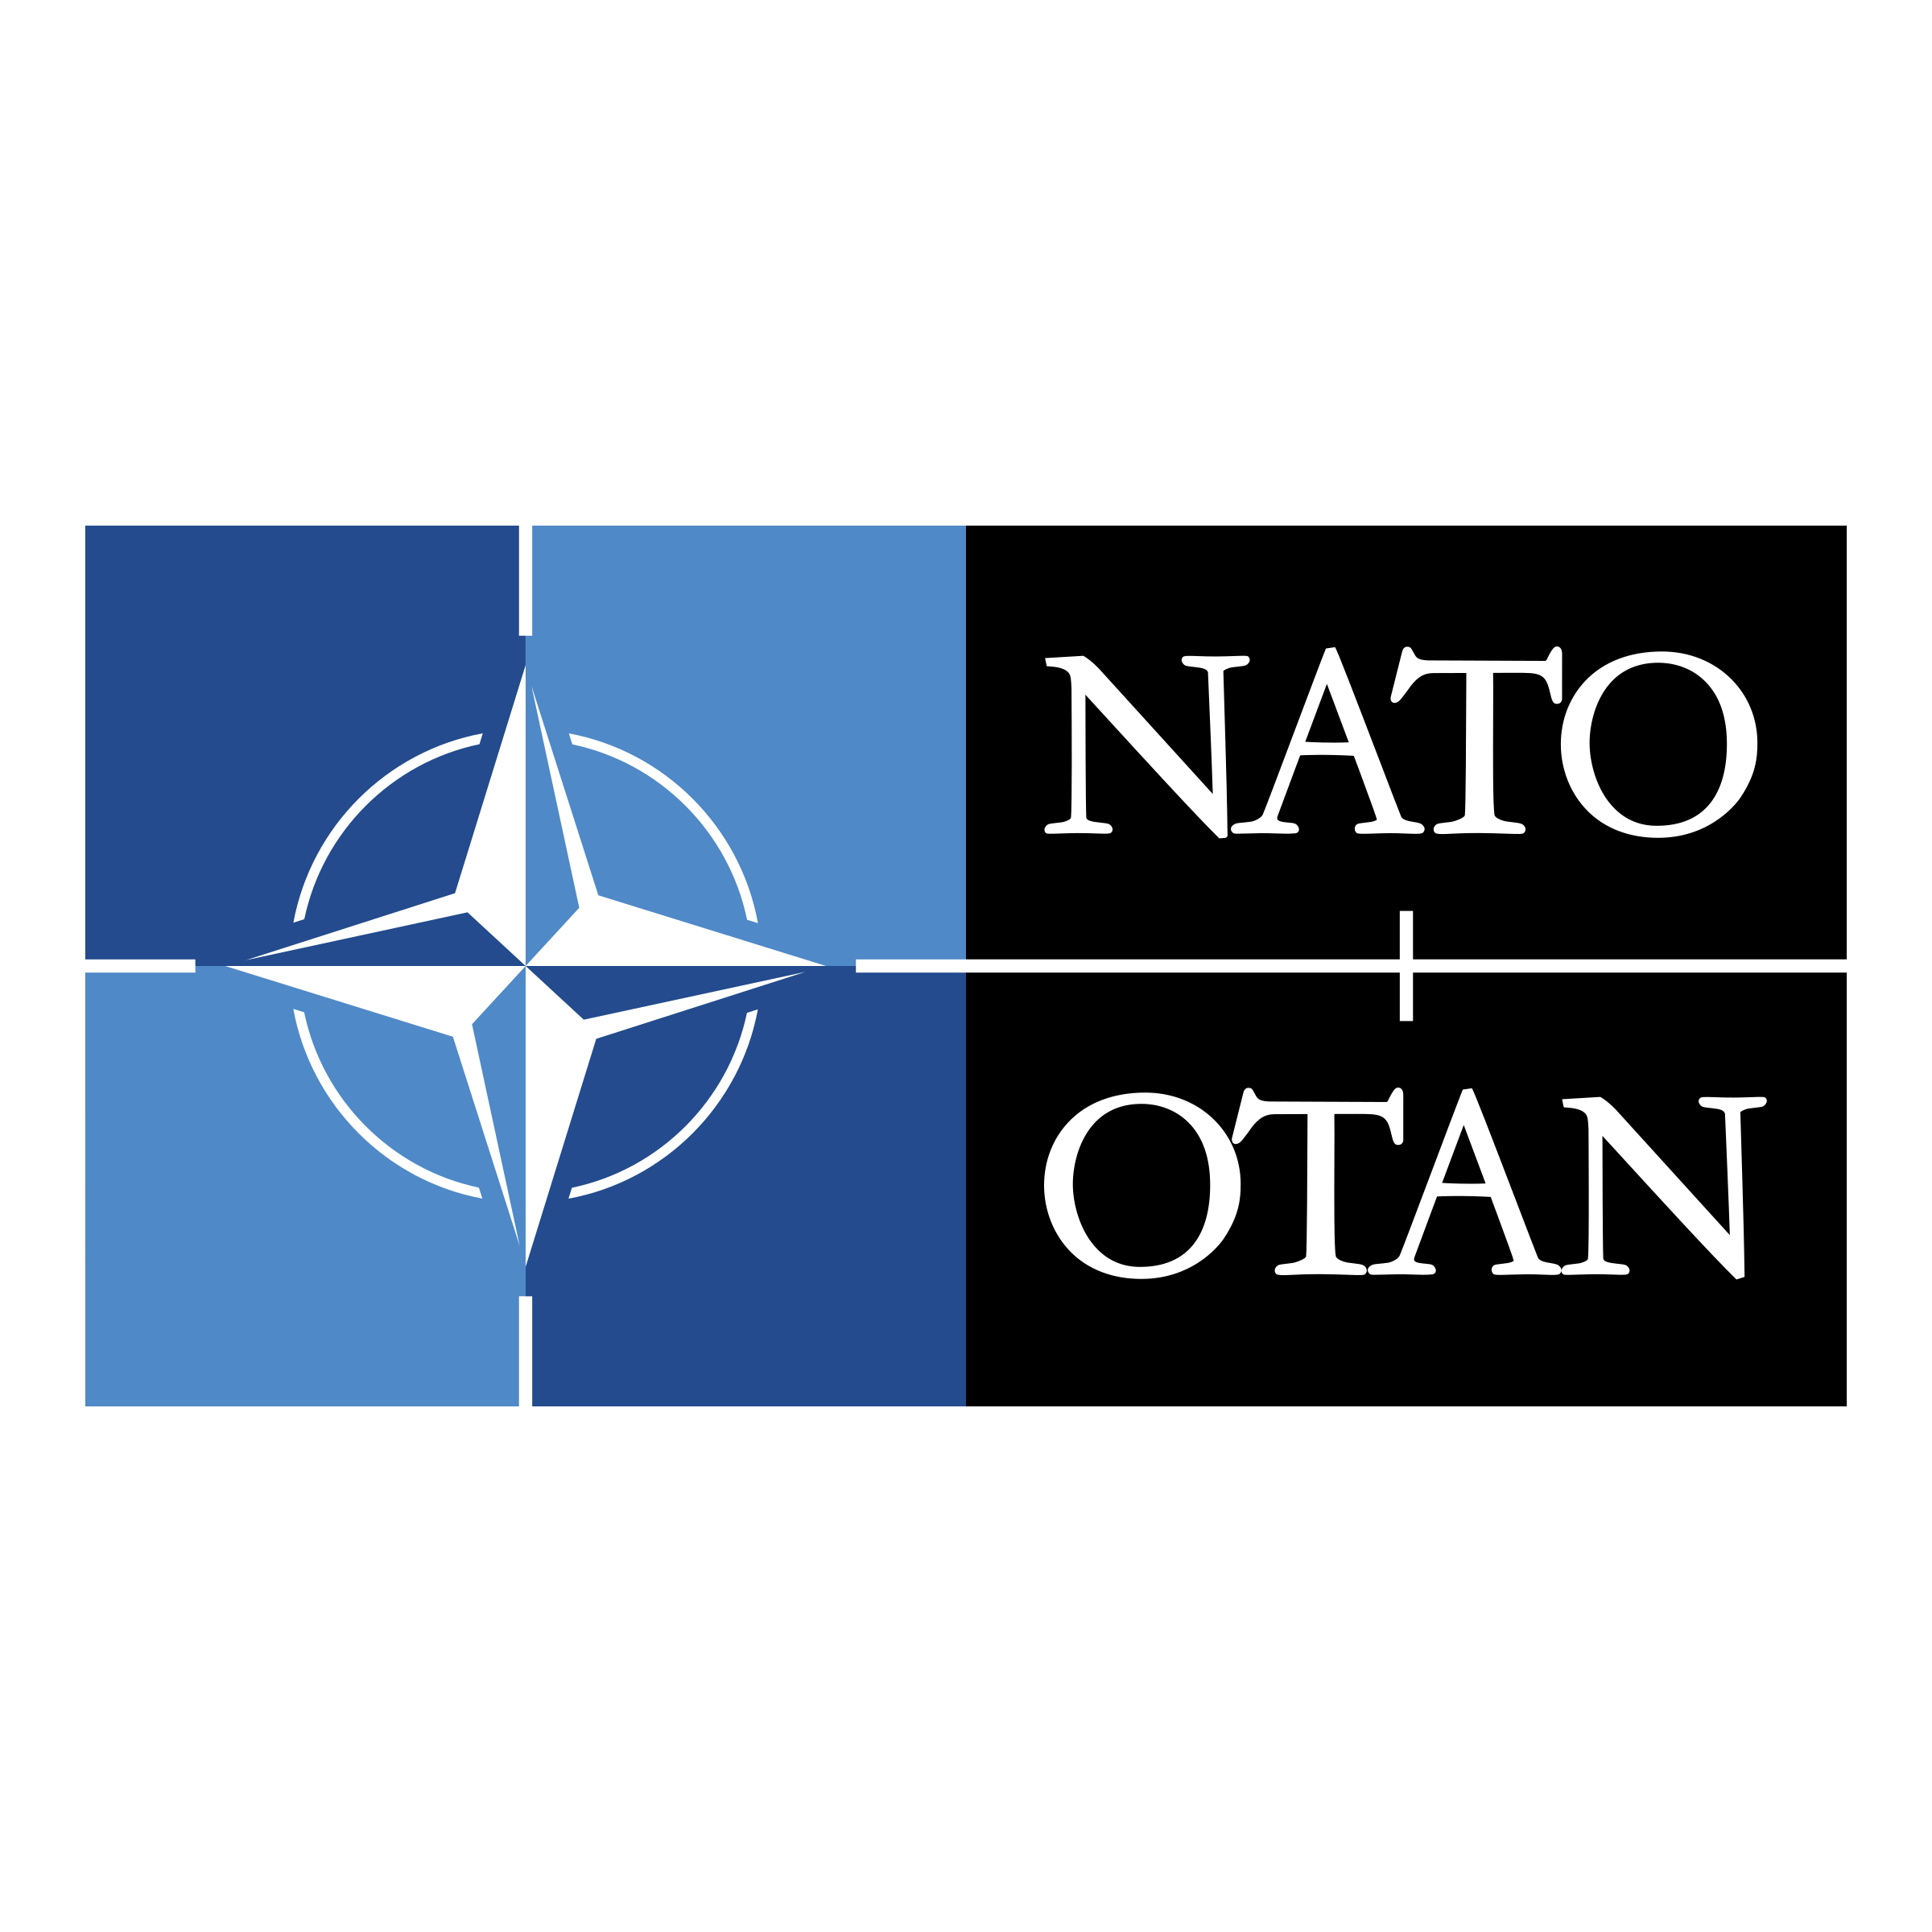 NATO Logo PNG Transparent & SVG Vector - Freebie Supply